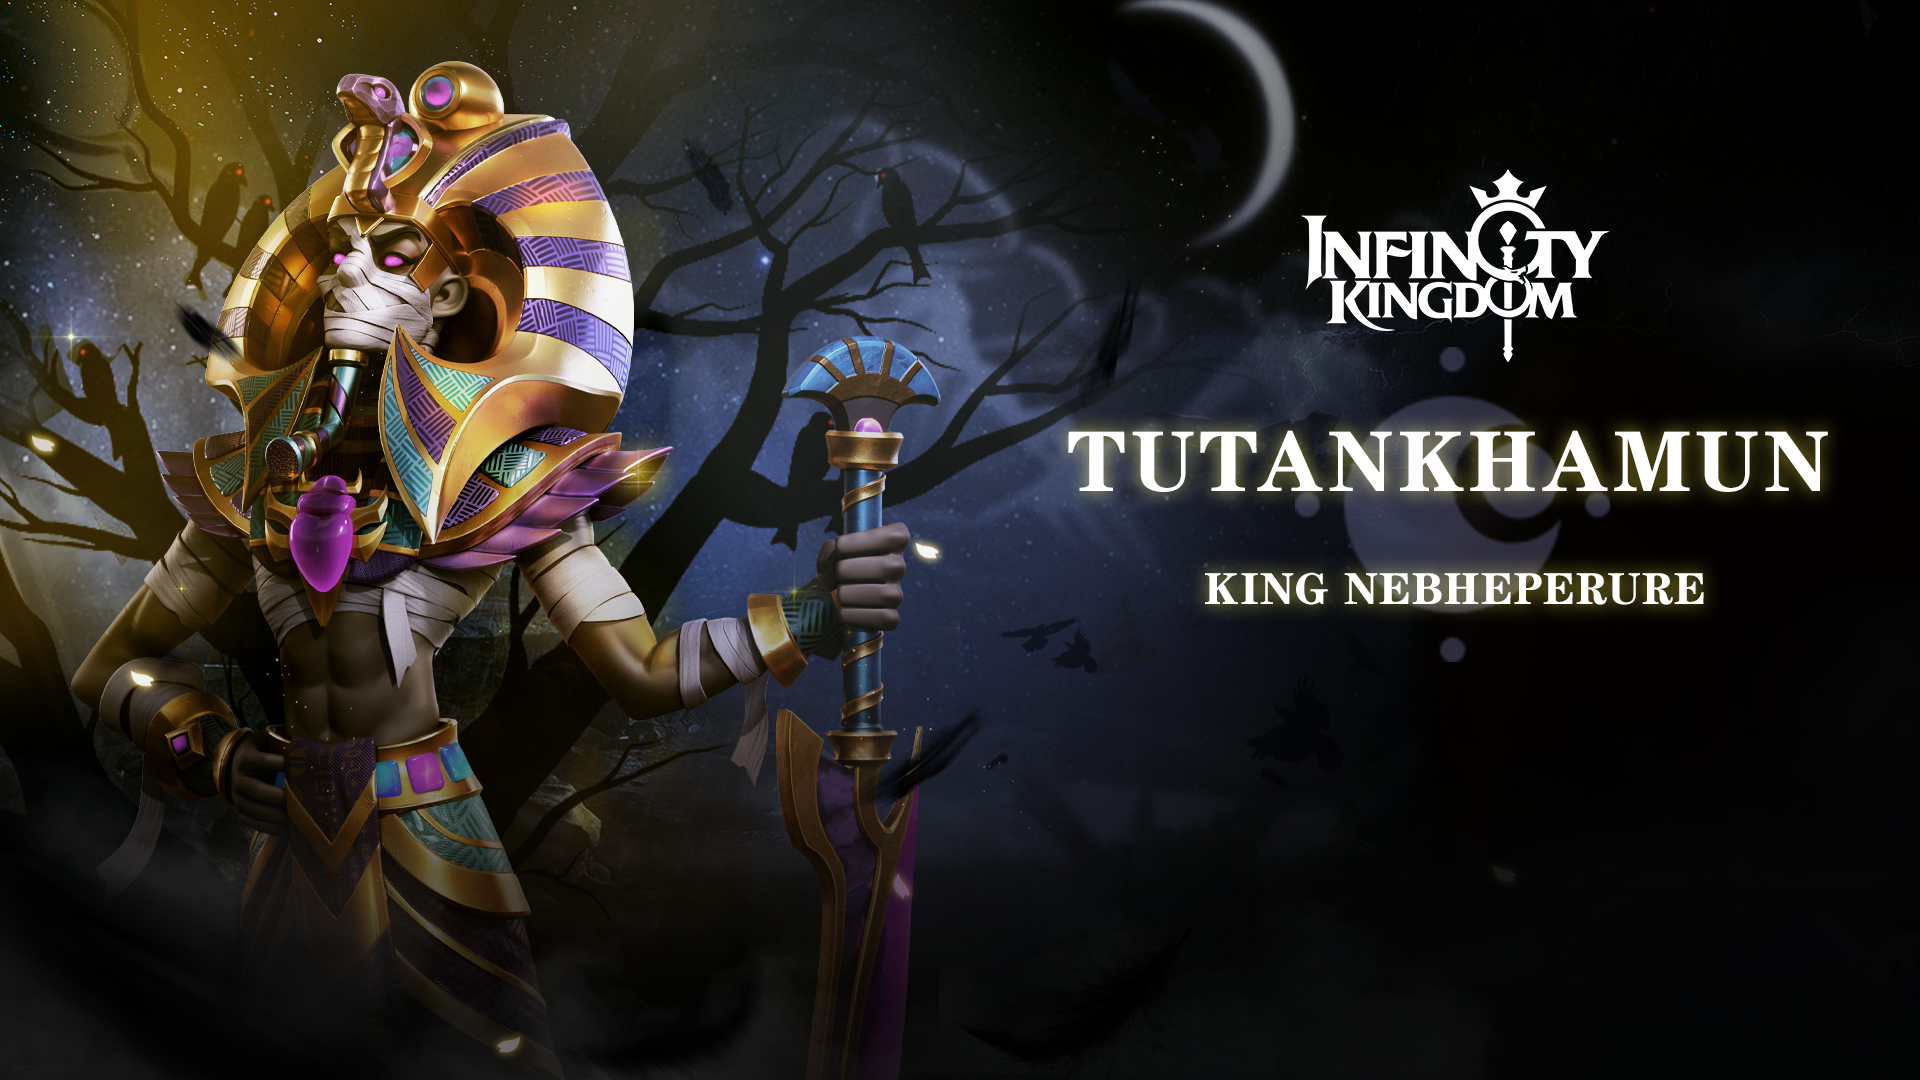 Tutankamon - Mysterious Power from the Pharaoh